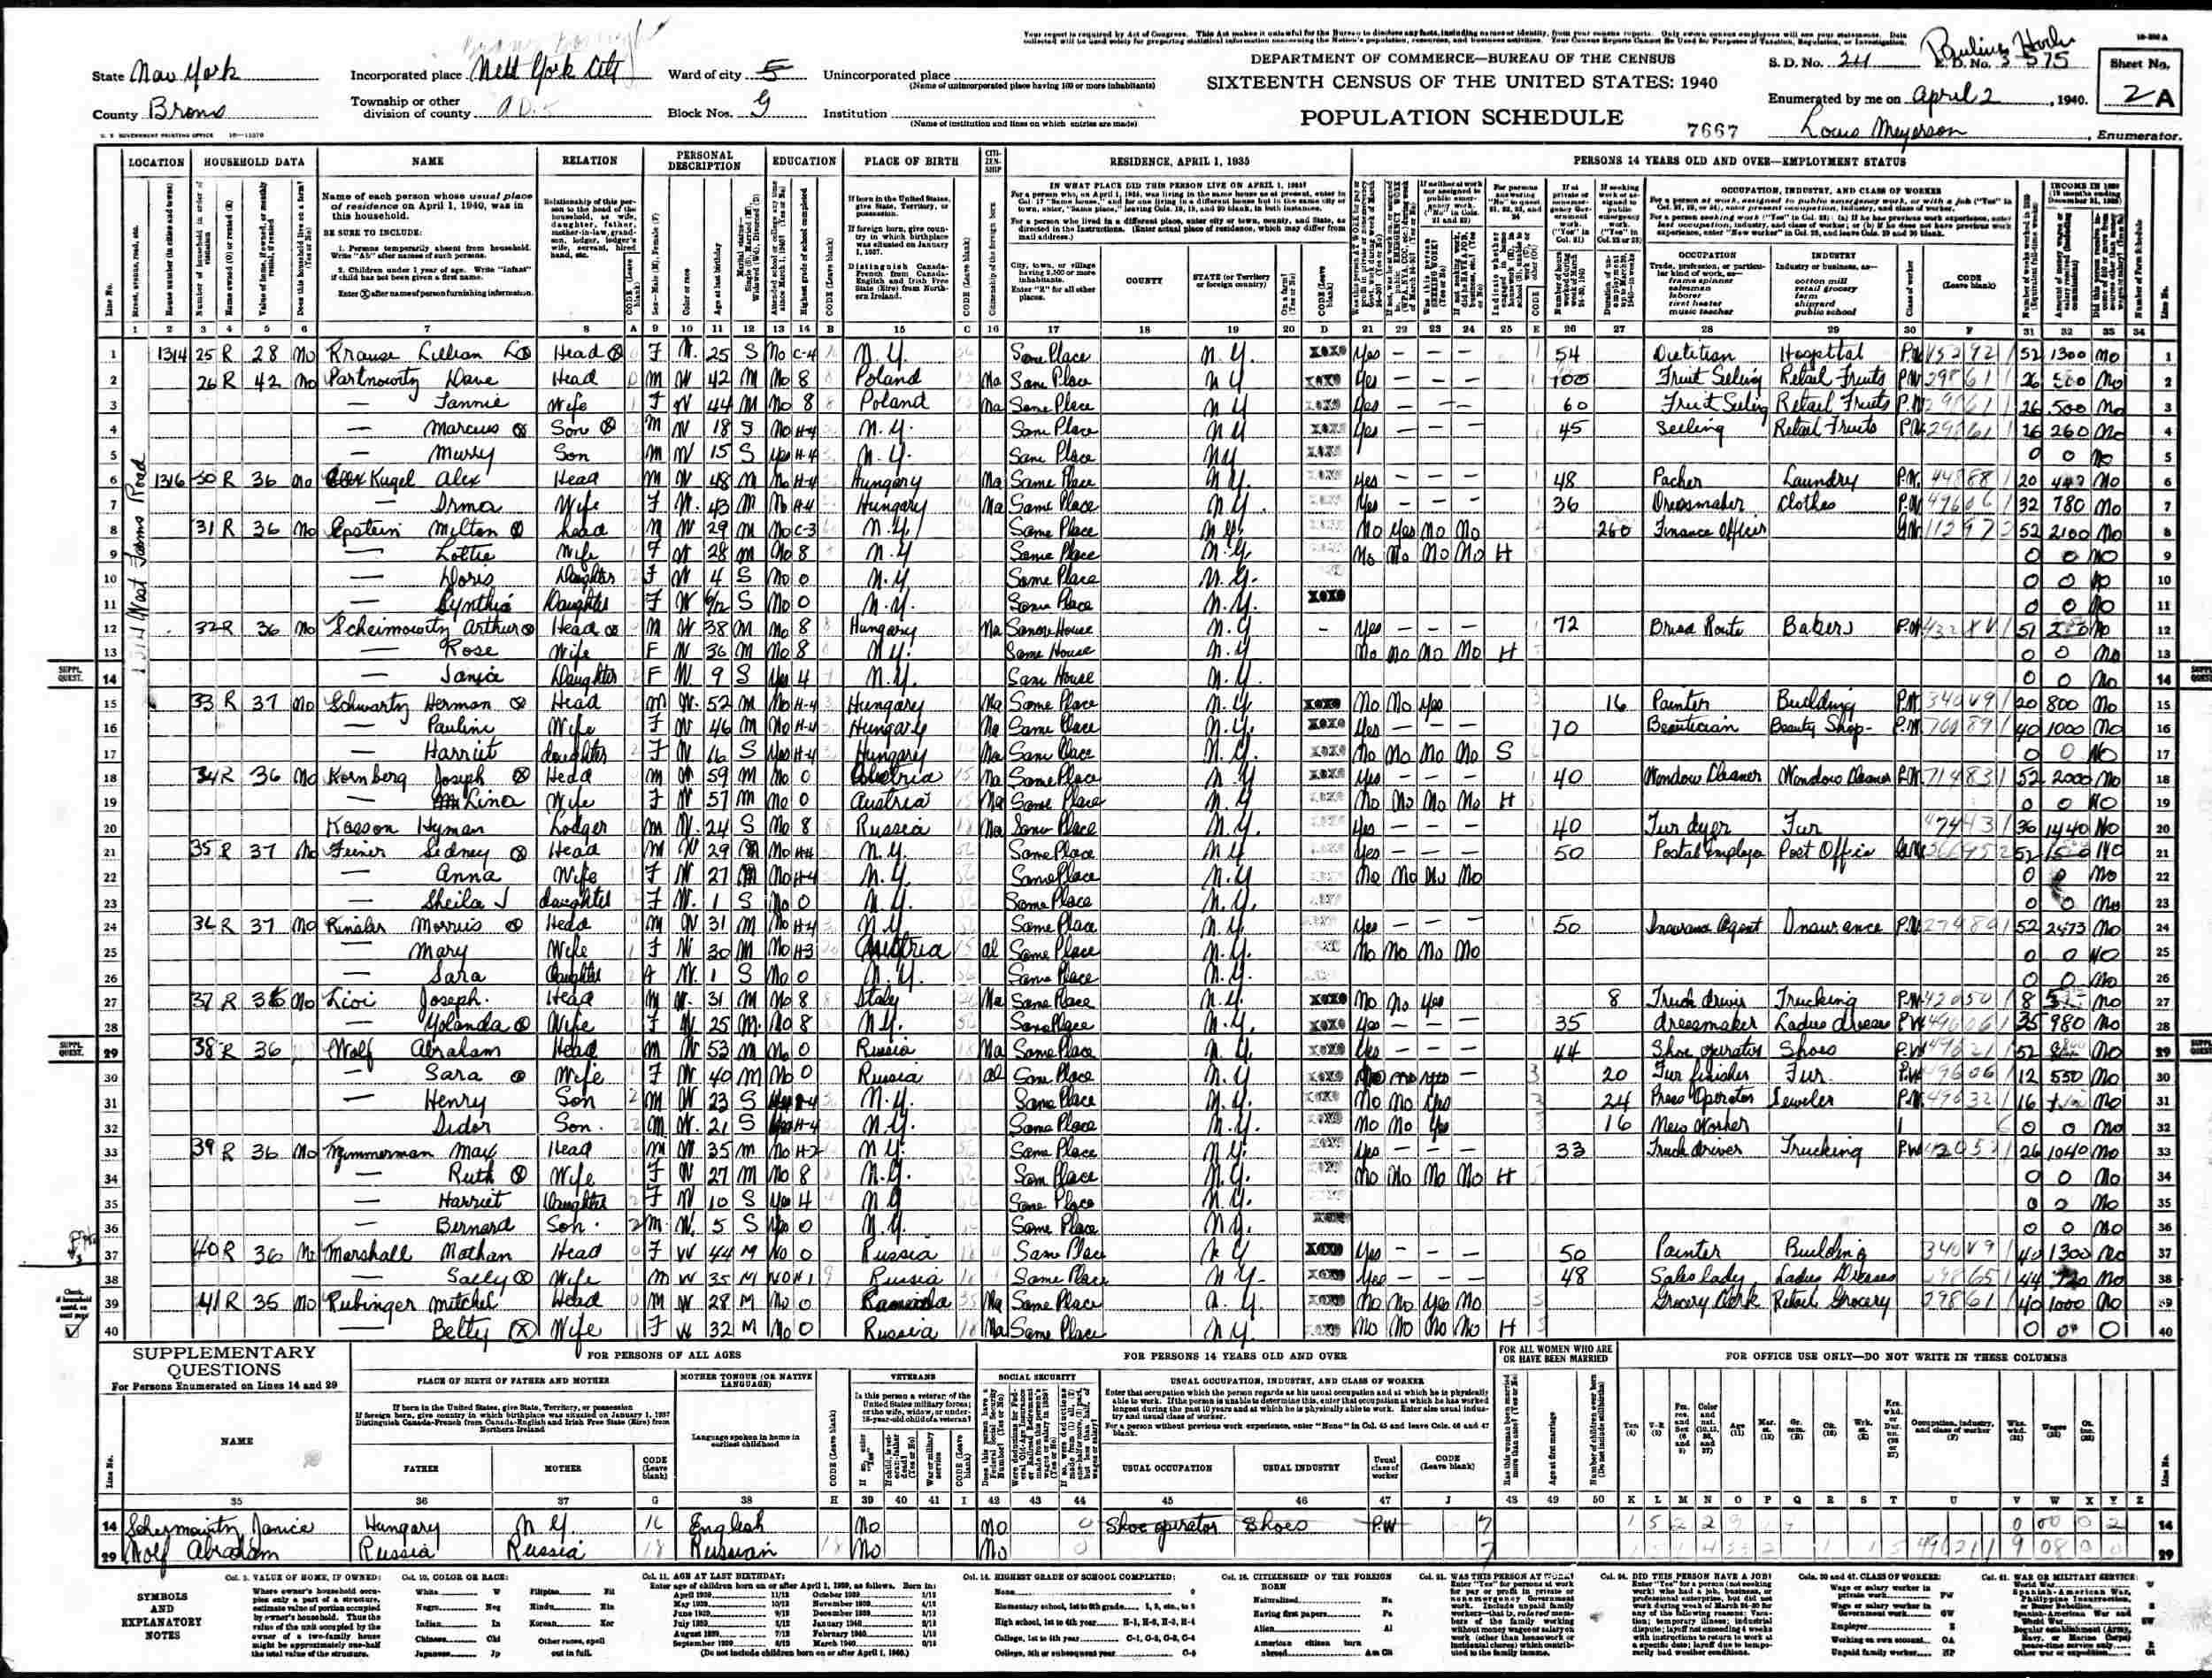 1925 new york census column 12